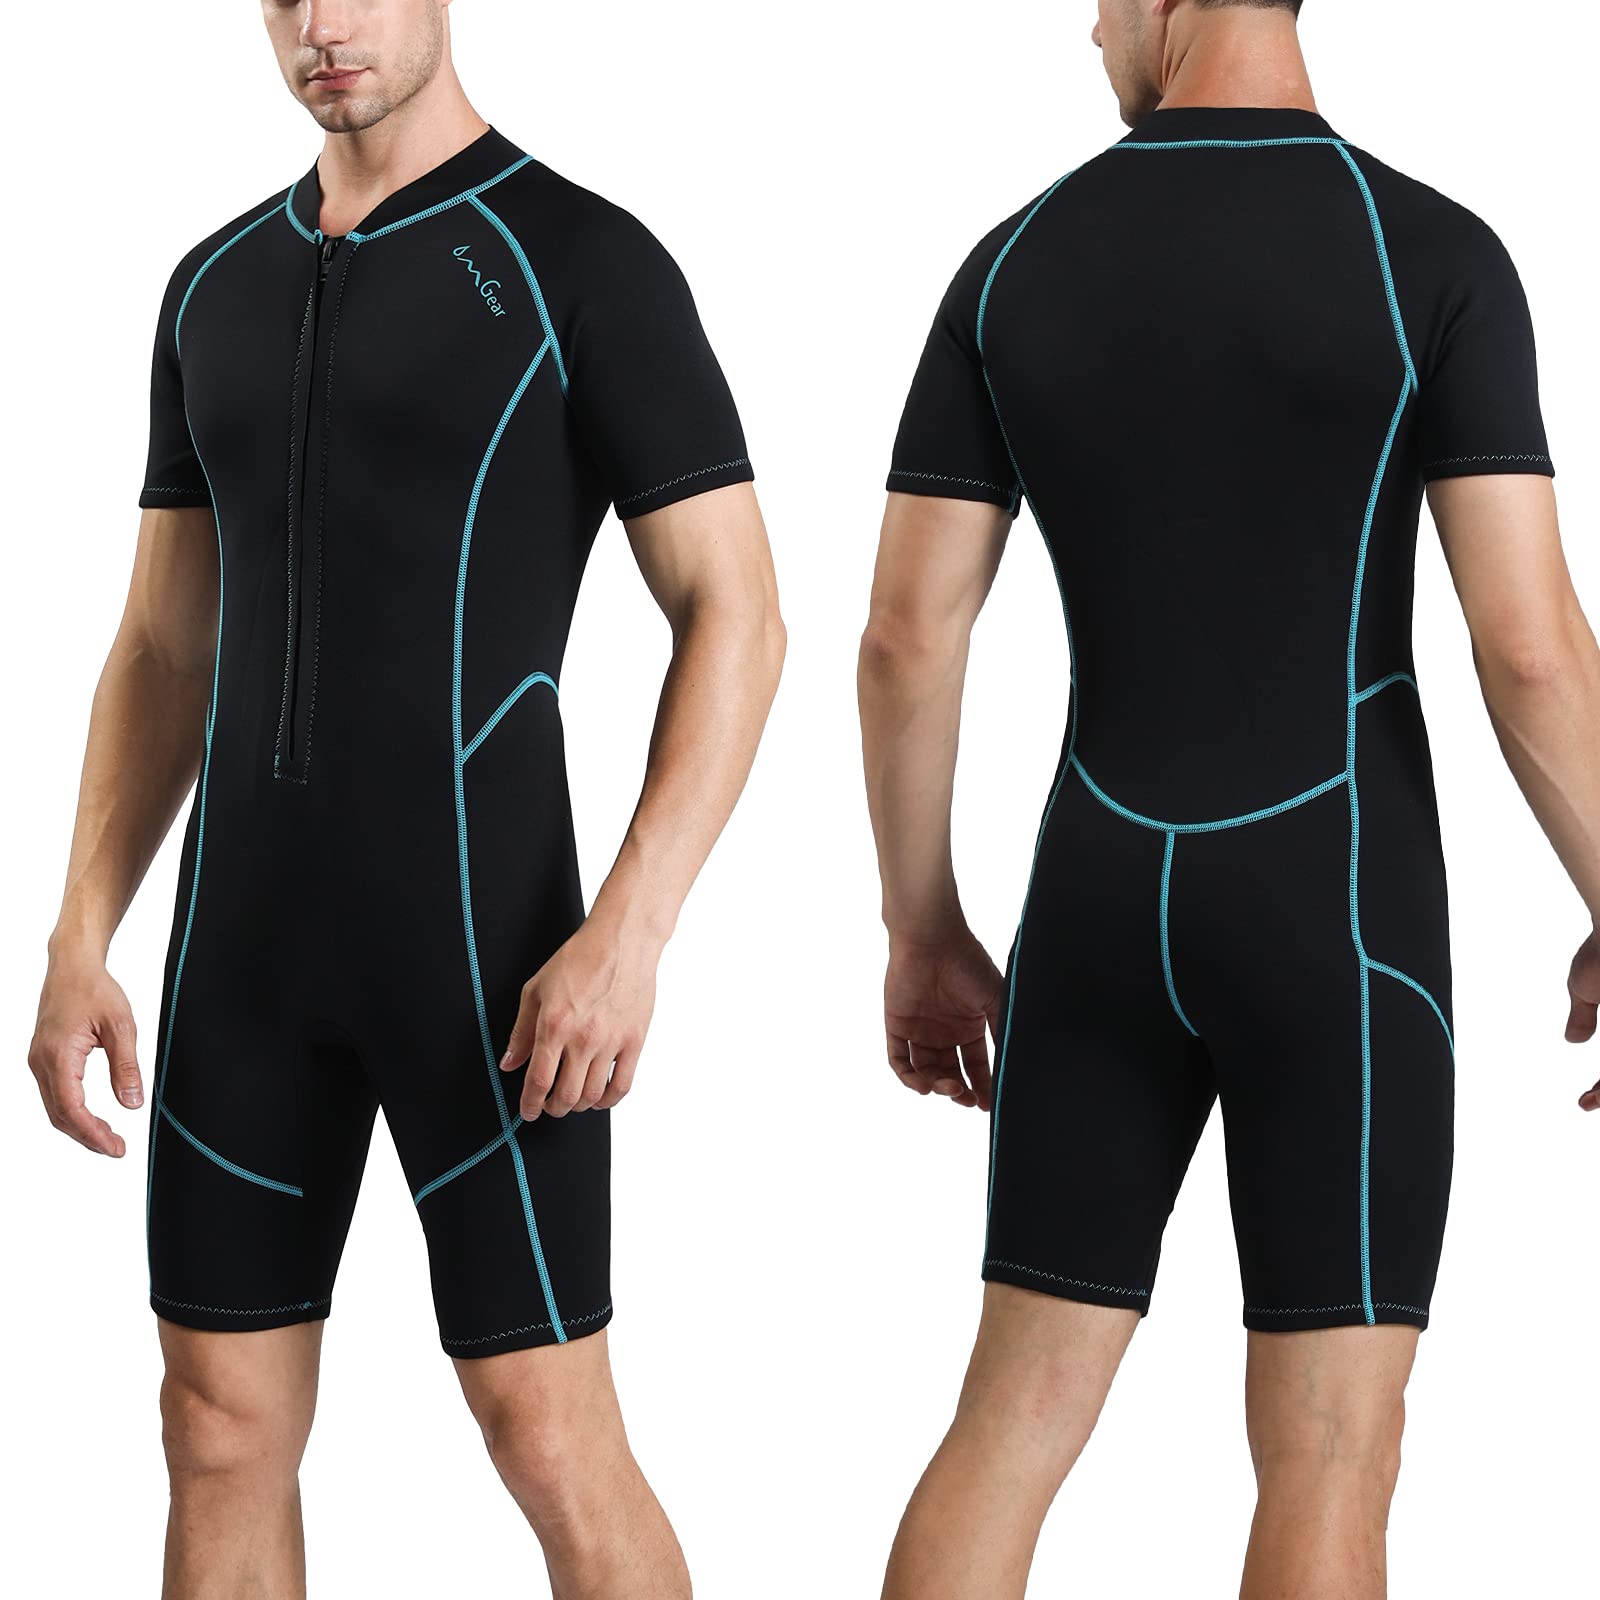 OMGear Wetsuit Women Men 2mm Neoprene Dive Shorty Wet Suit Thermal